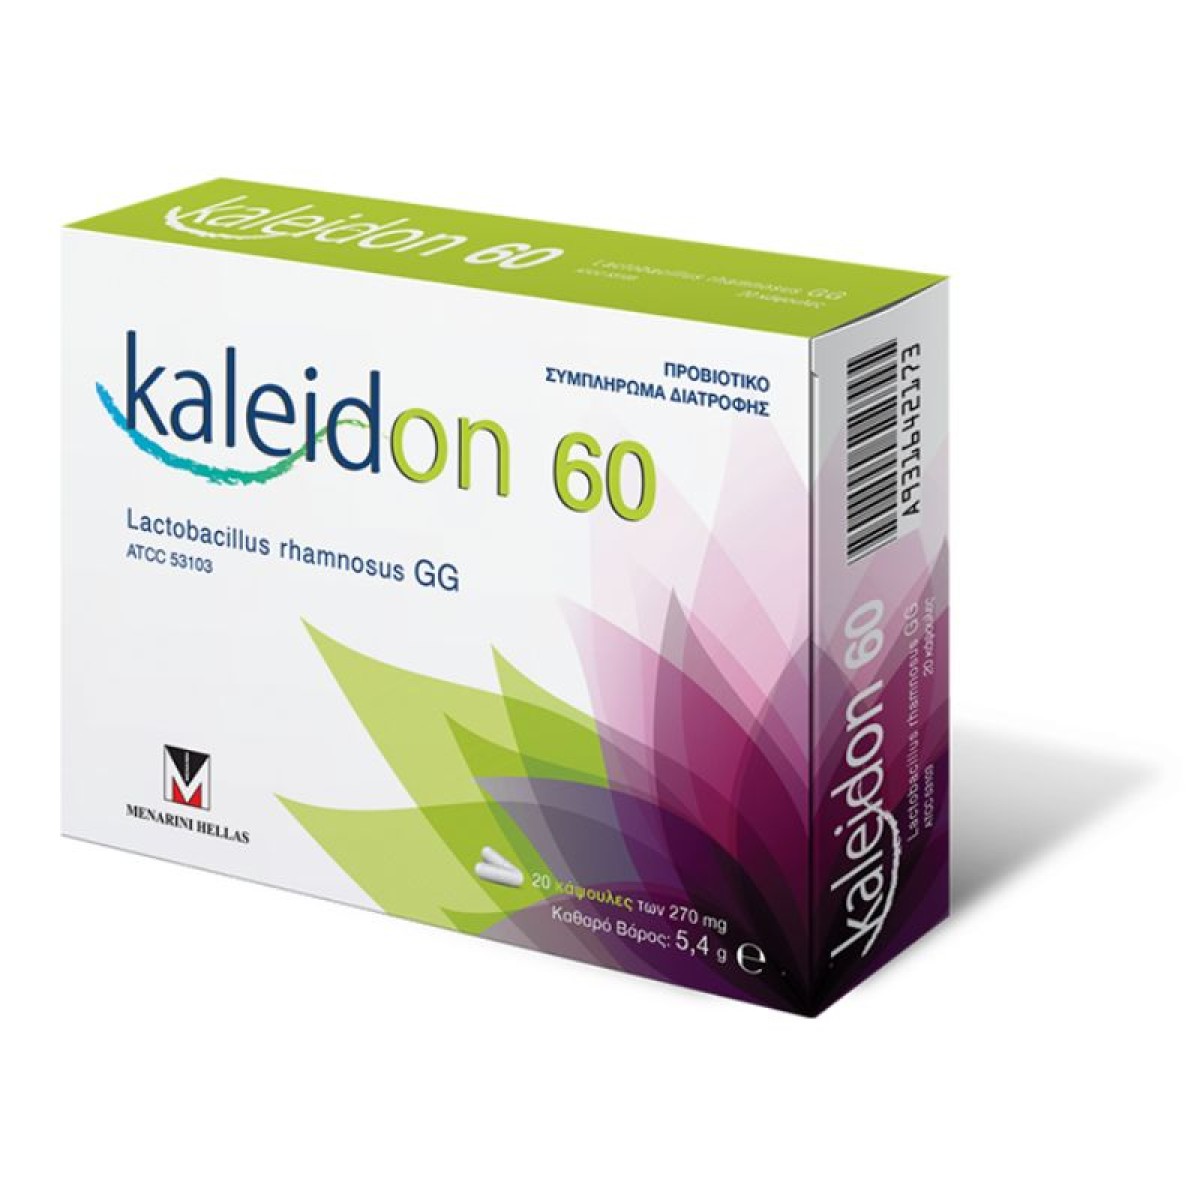 Kaleidon 60 |  Προβιοτικό | 20caps